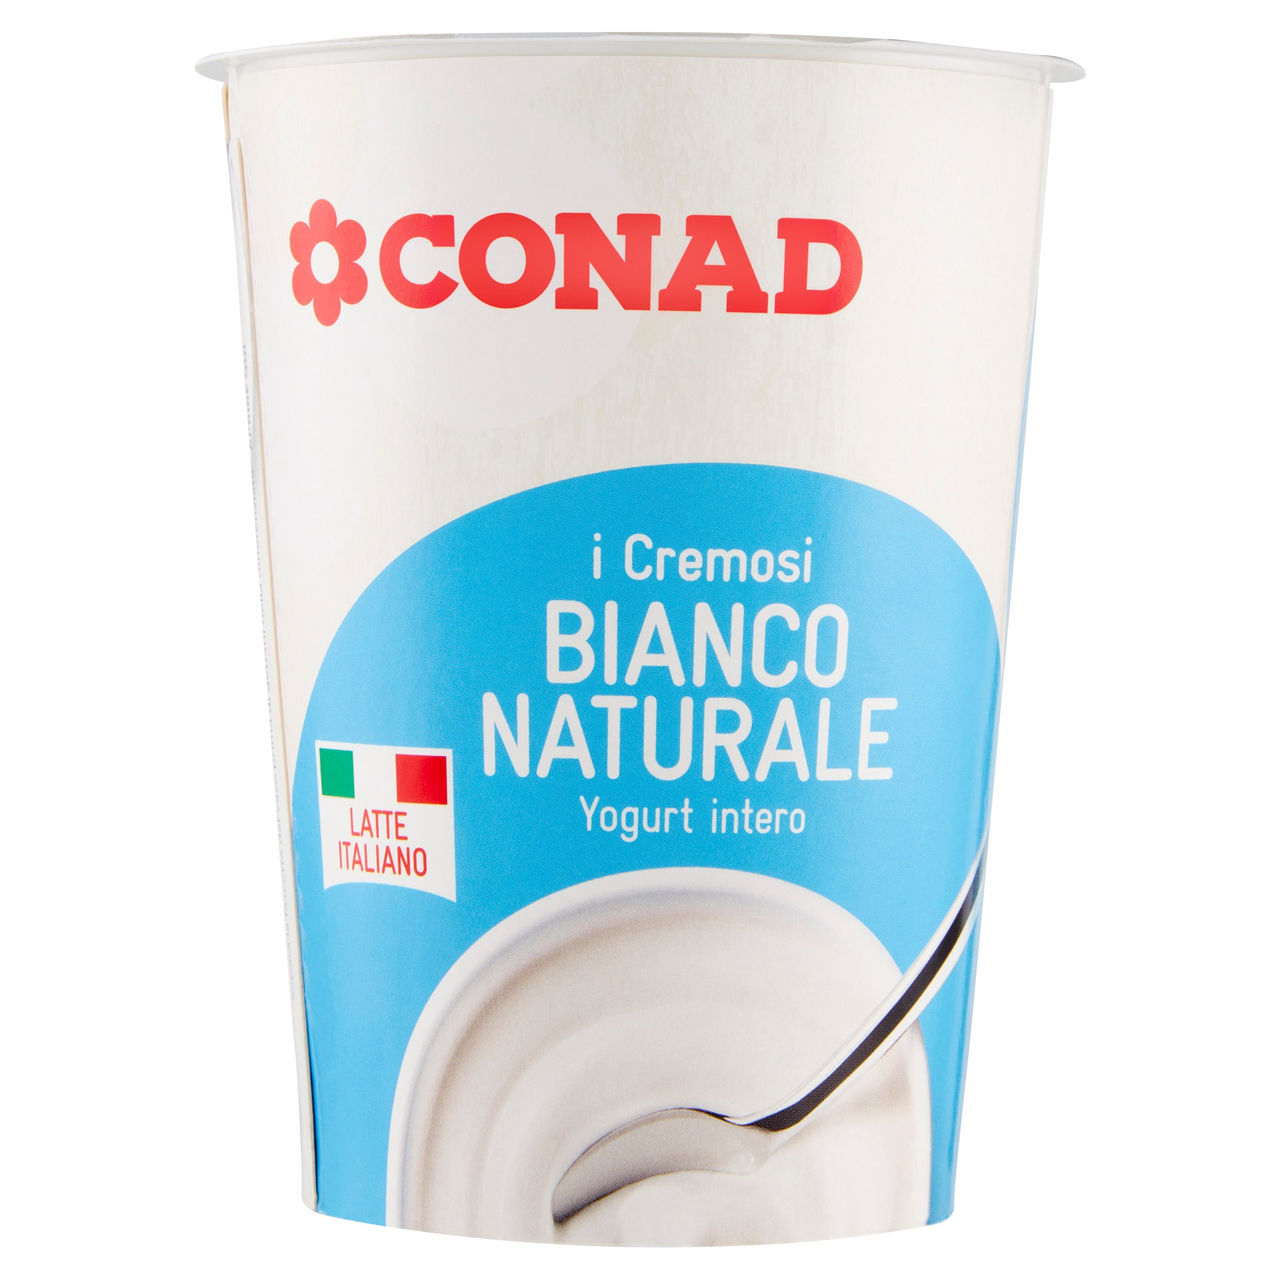 Yogurt Intero Bianco Naturale 500g i Cremosi Conad